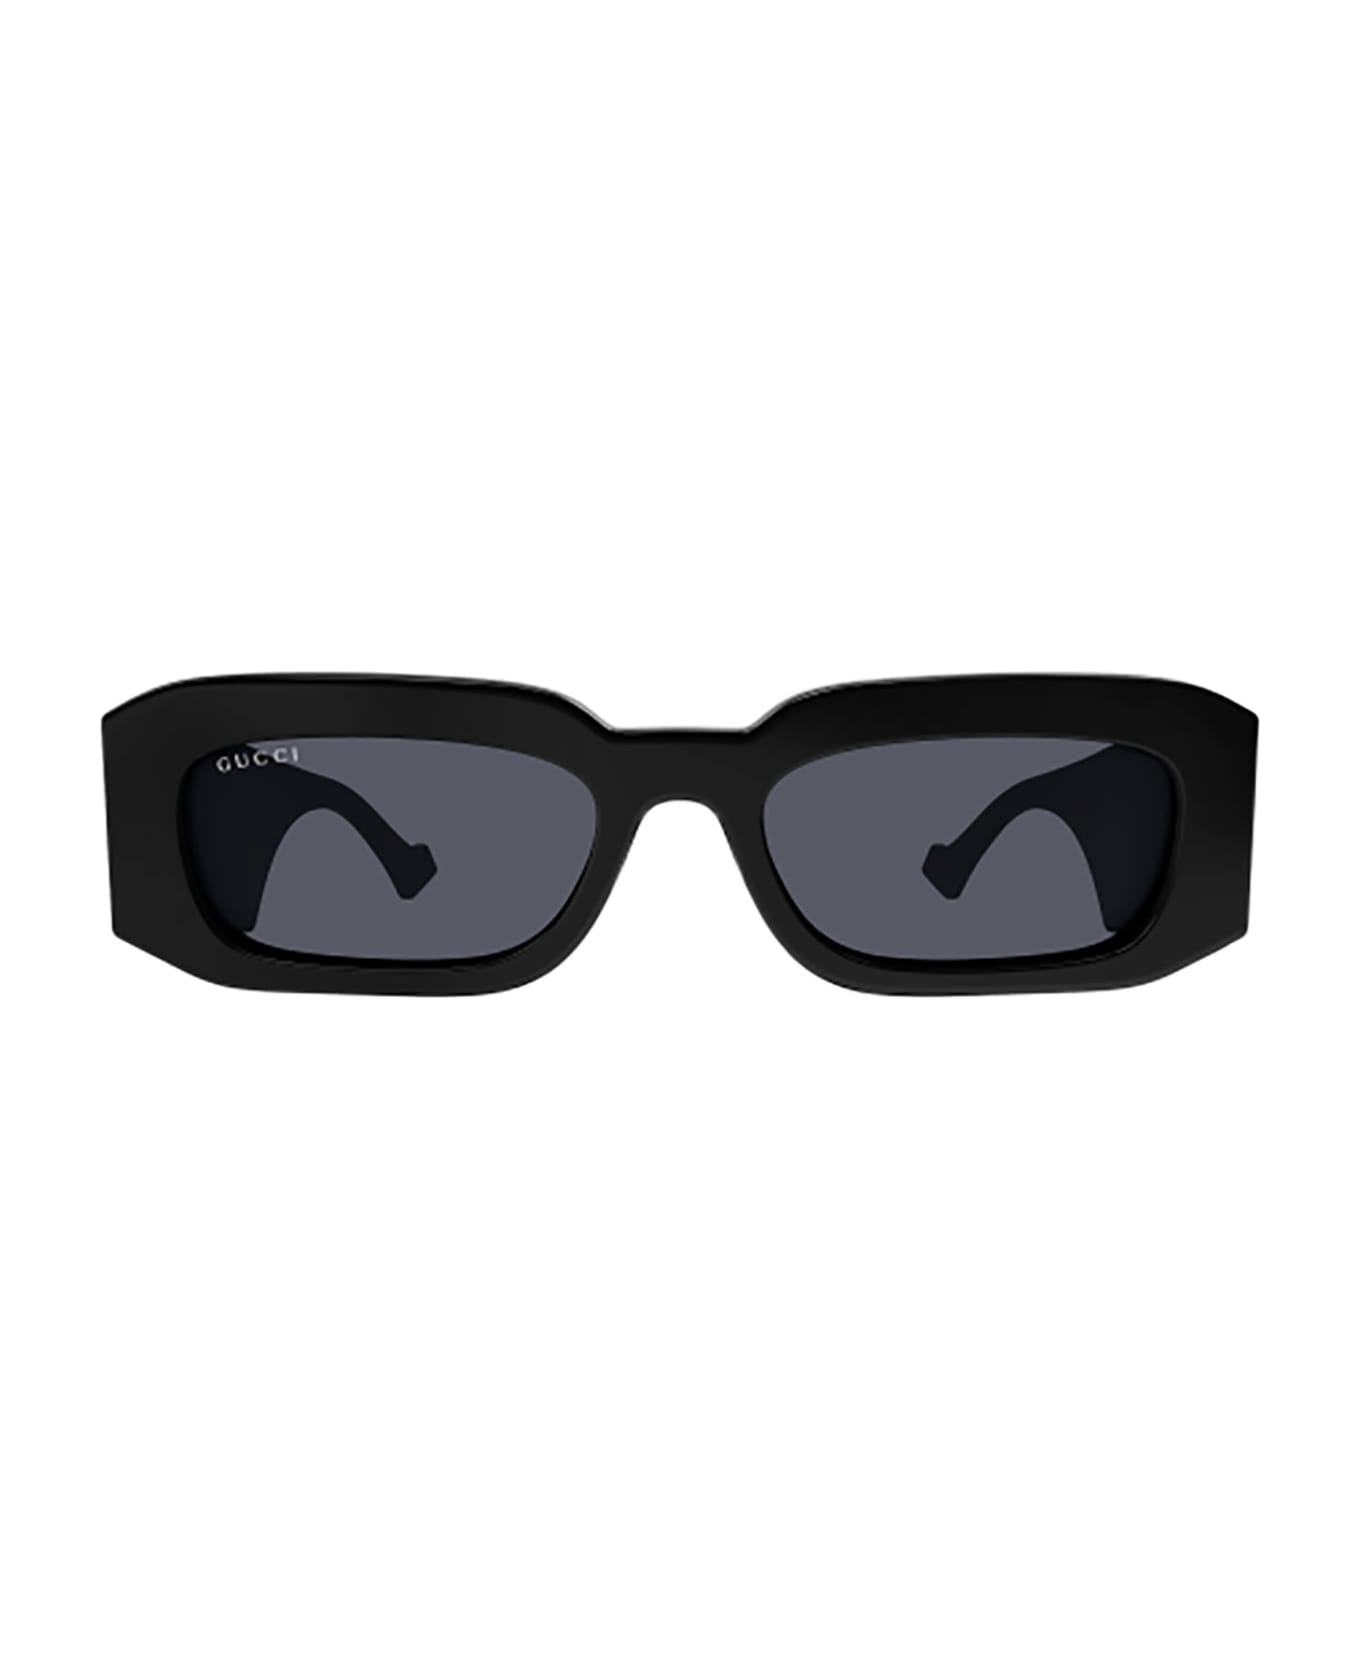 Gucci Eyewear GG1426S Sunglasses - Black Black Grey